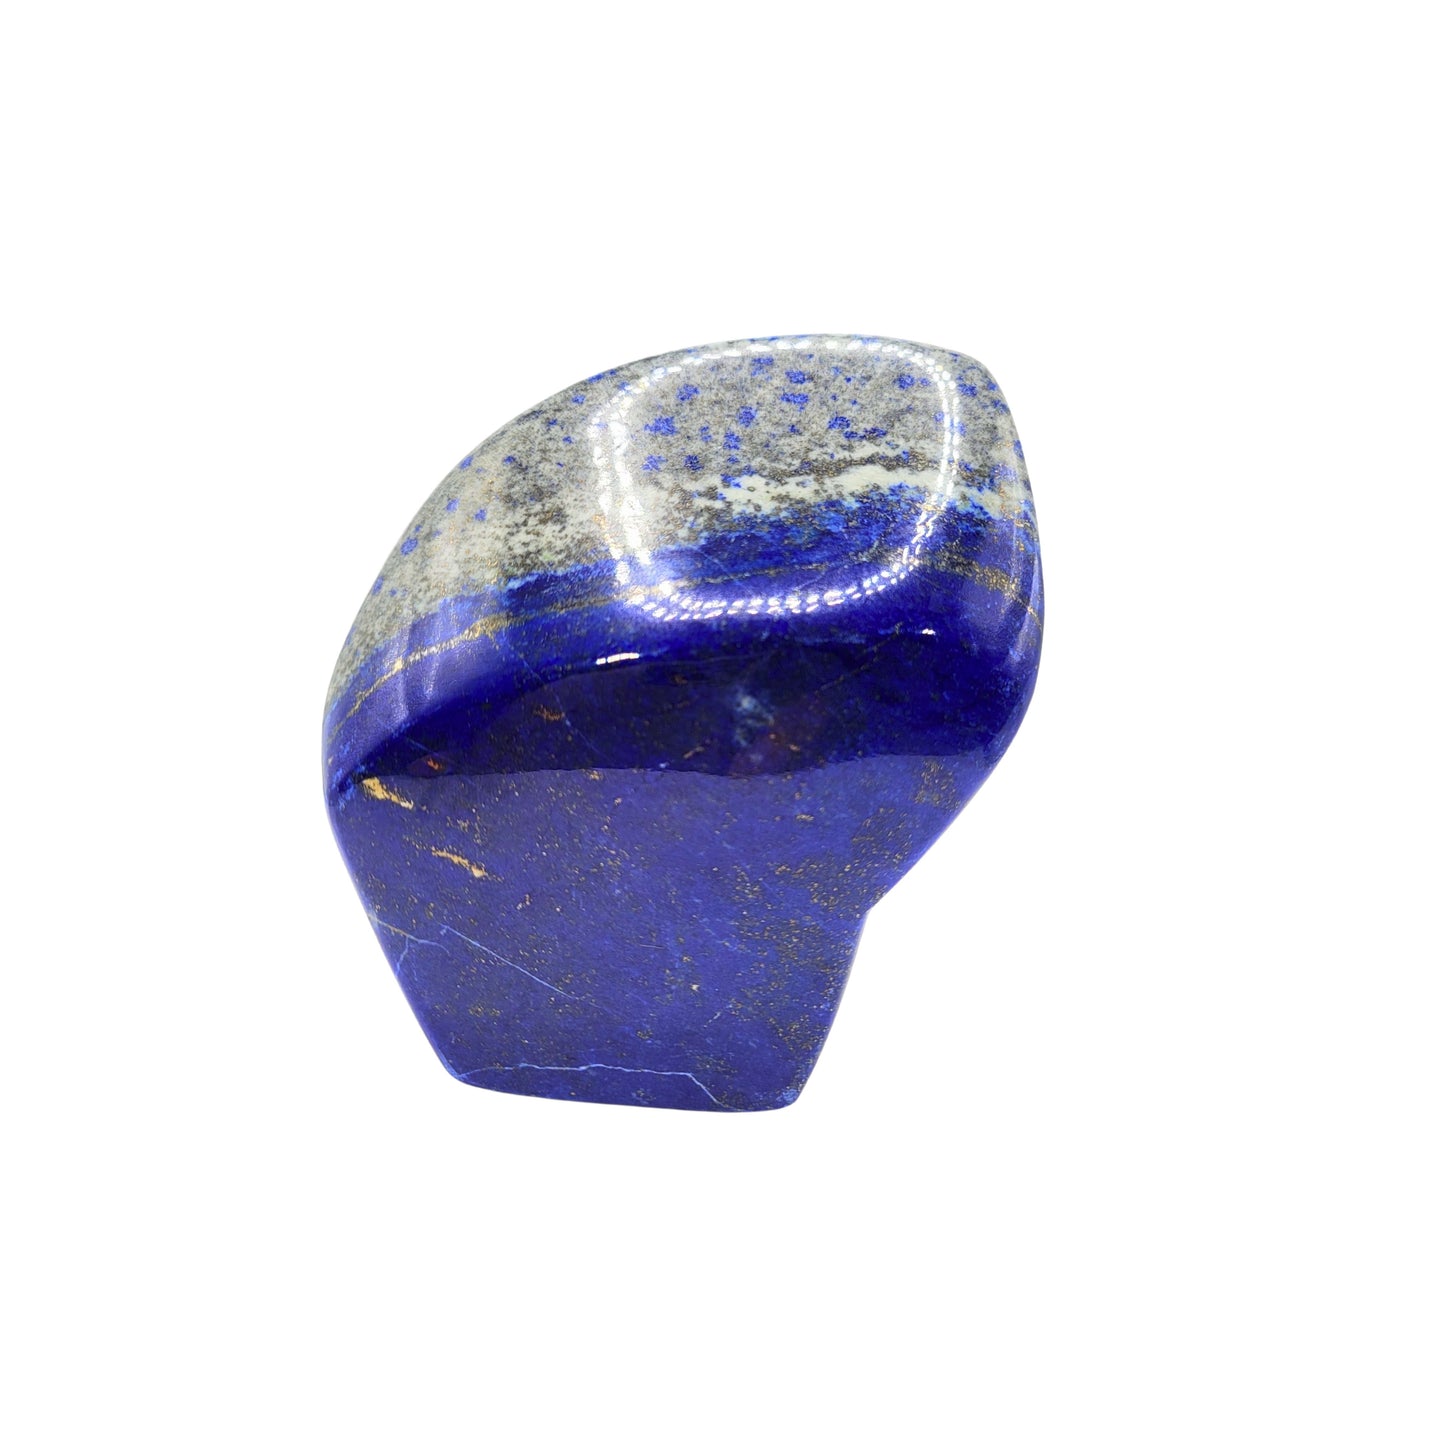 Lapis Lazuli ACG-109